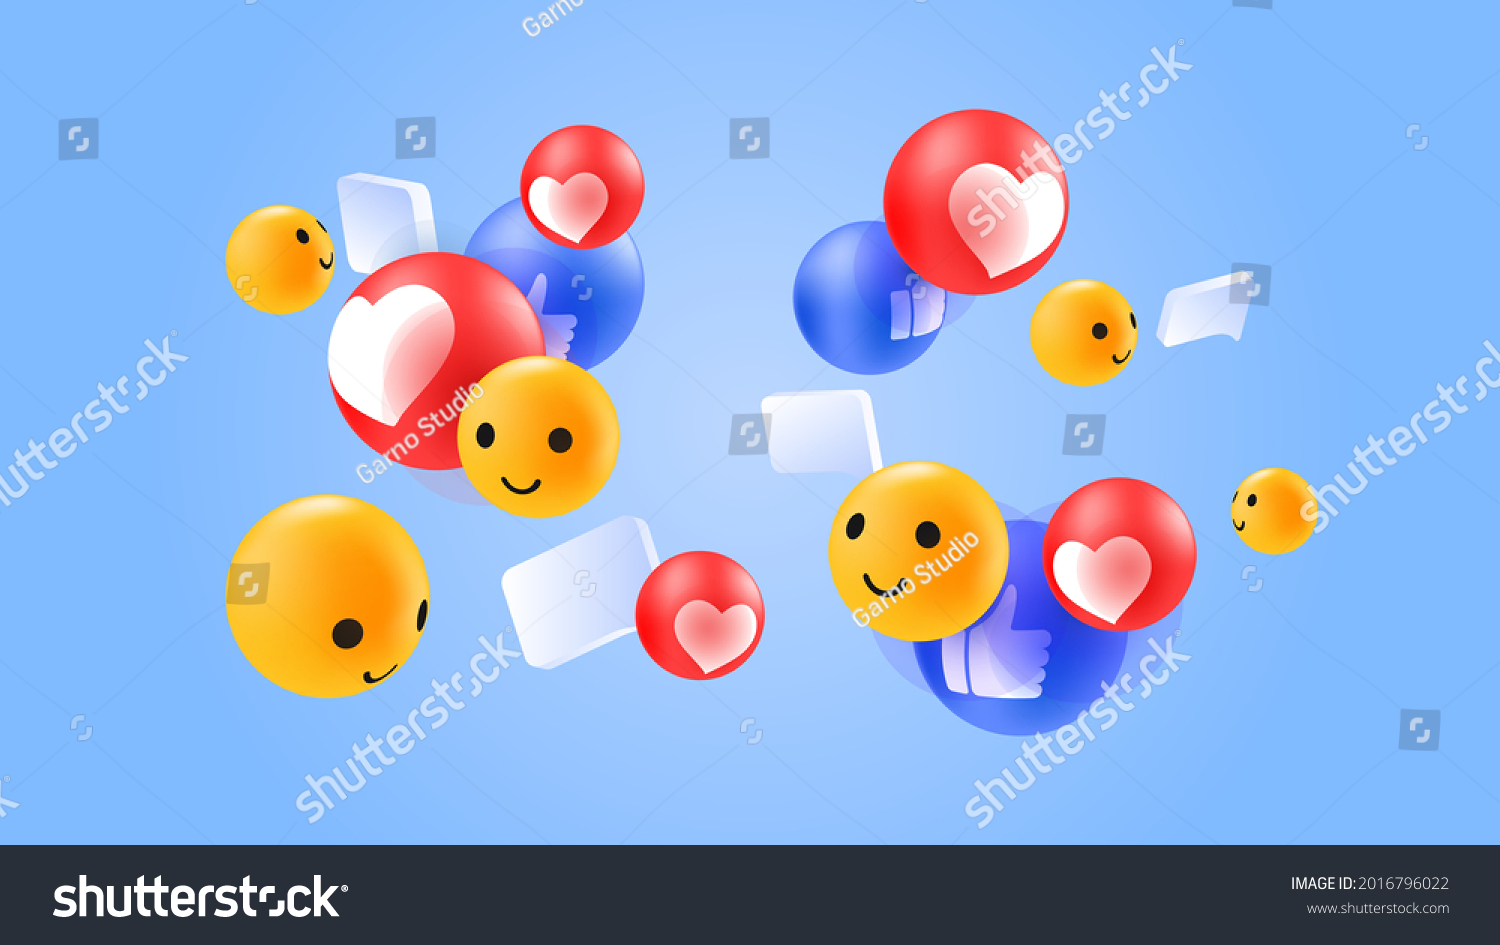 SVG of Colorful Emoji Reactions Background. Like, Thumb Up, Smiling Emoticon. Vector illustration svg